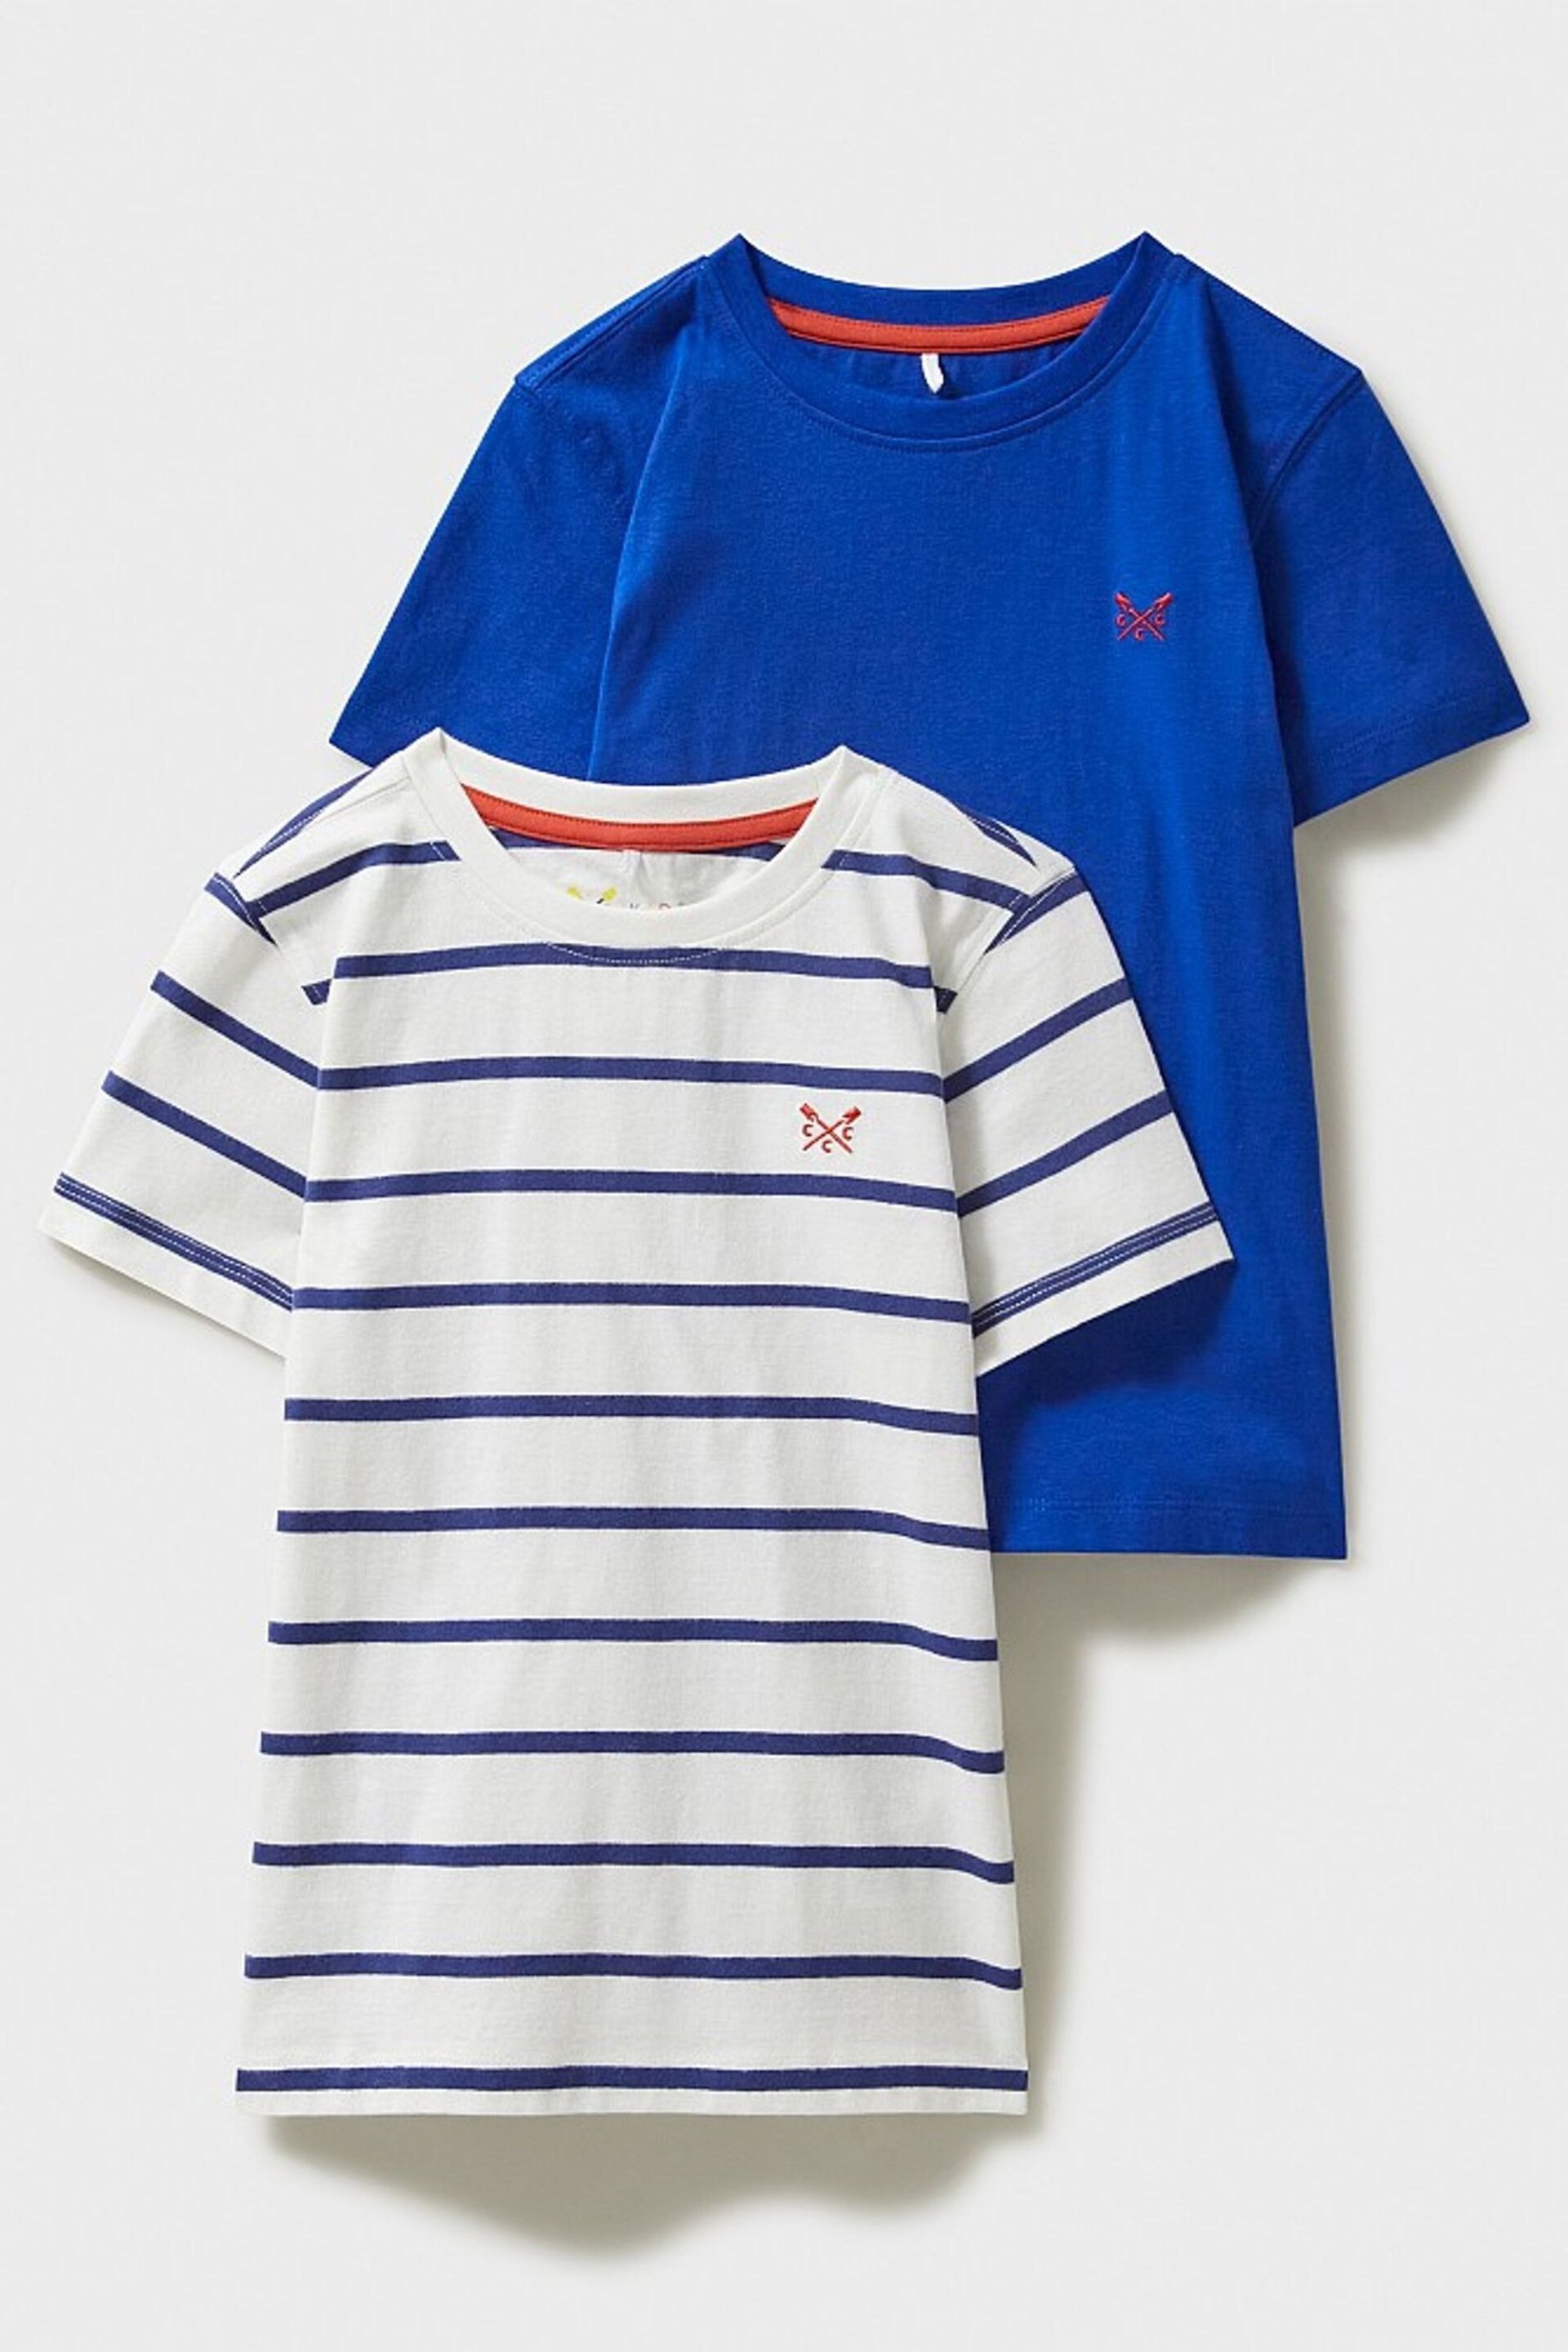 Crew Clothing Company Blue Stripe Cotton Classic T-Shirt 2 PK - Image 1 of 5